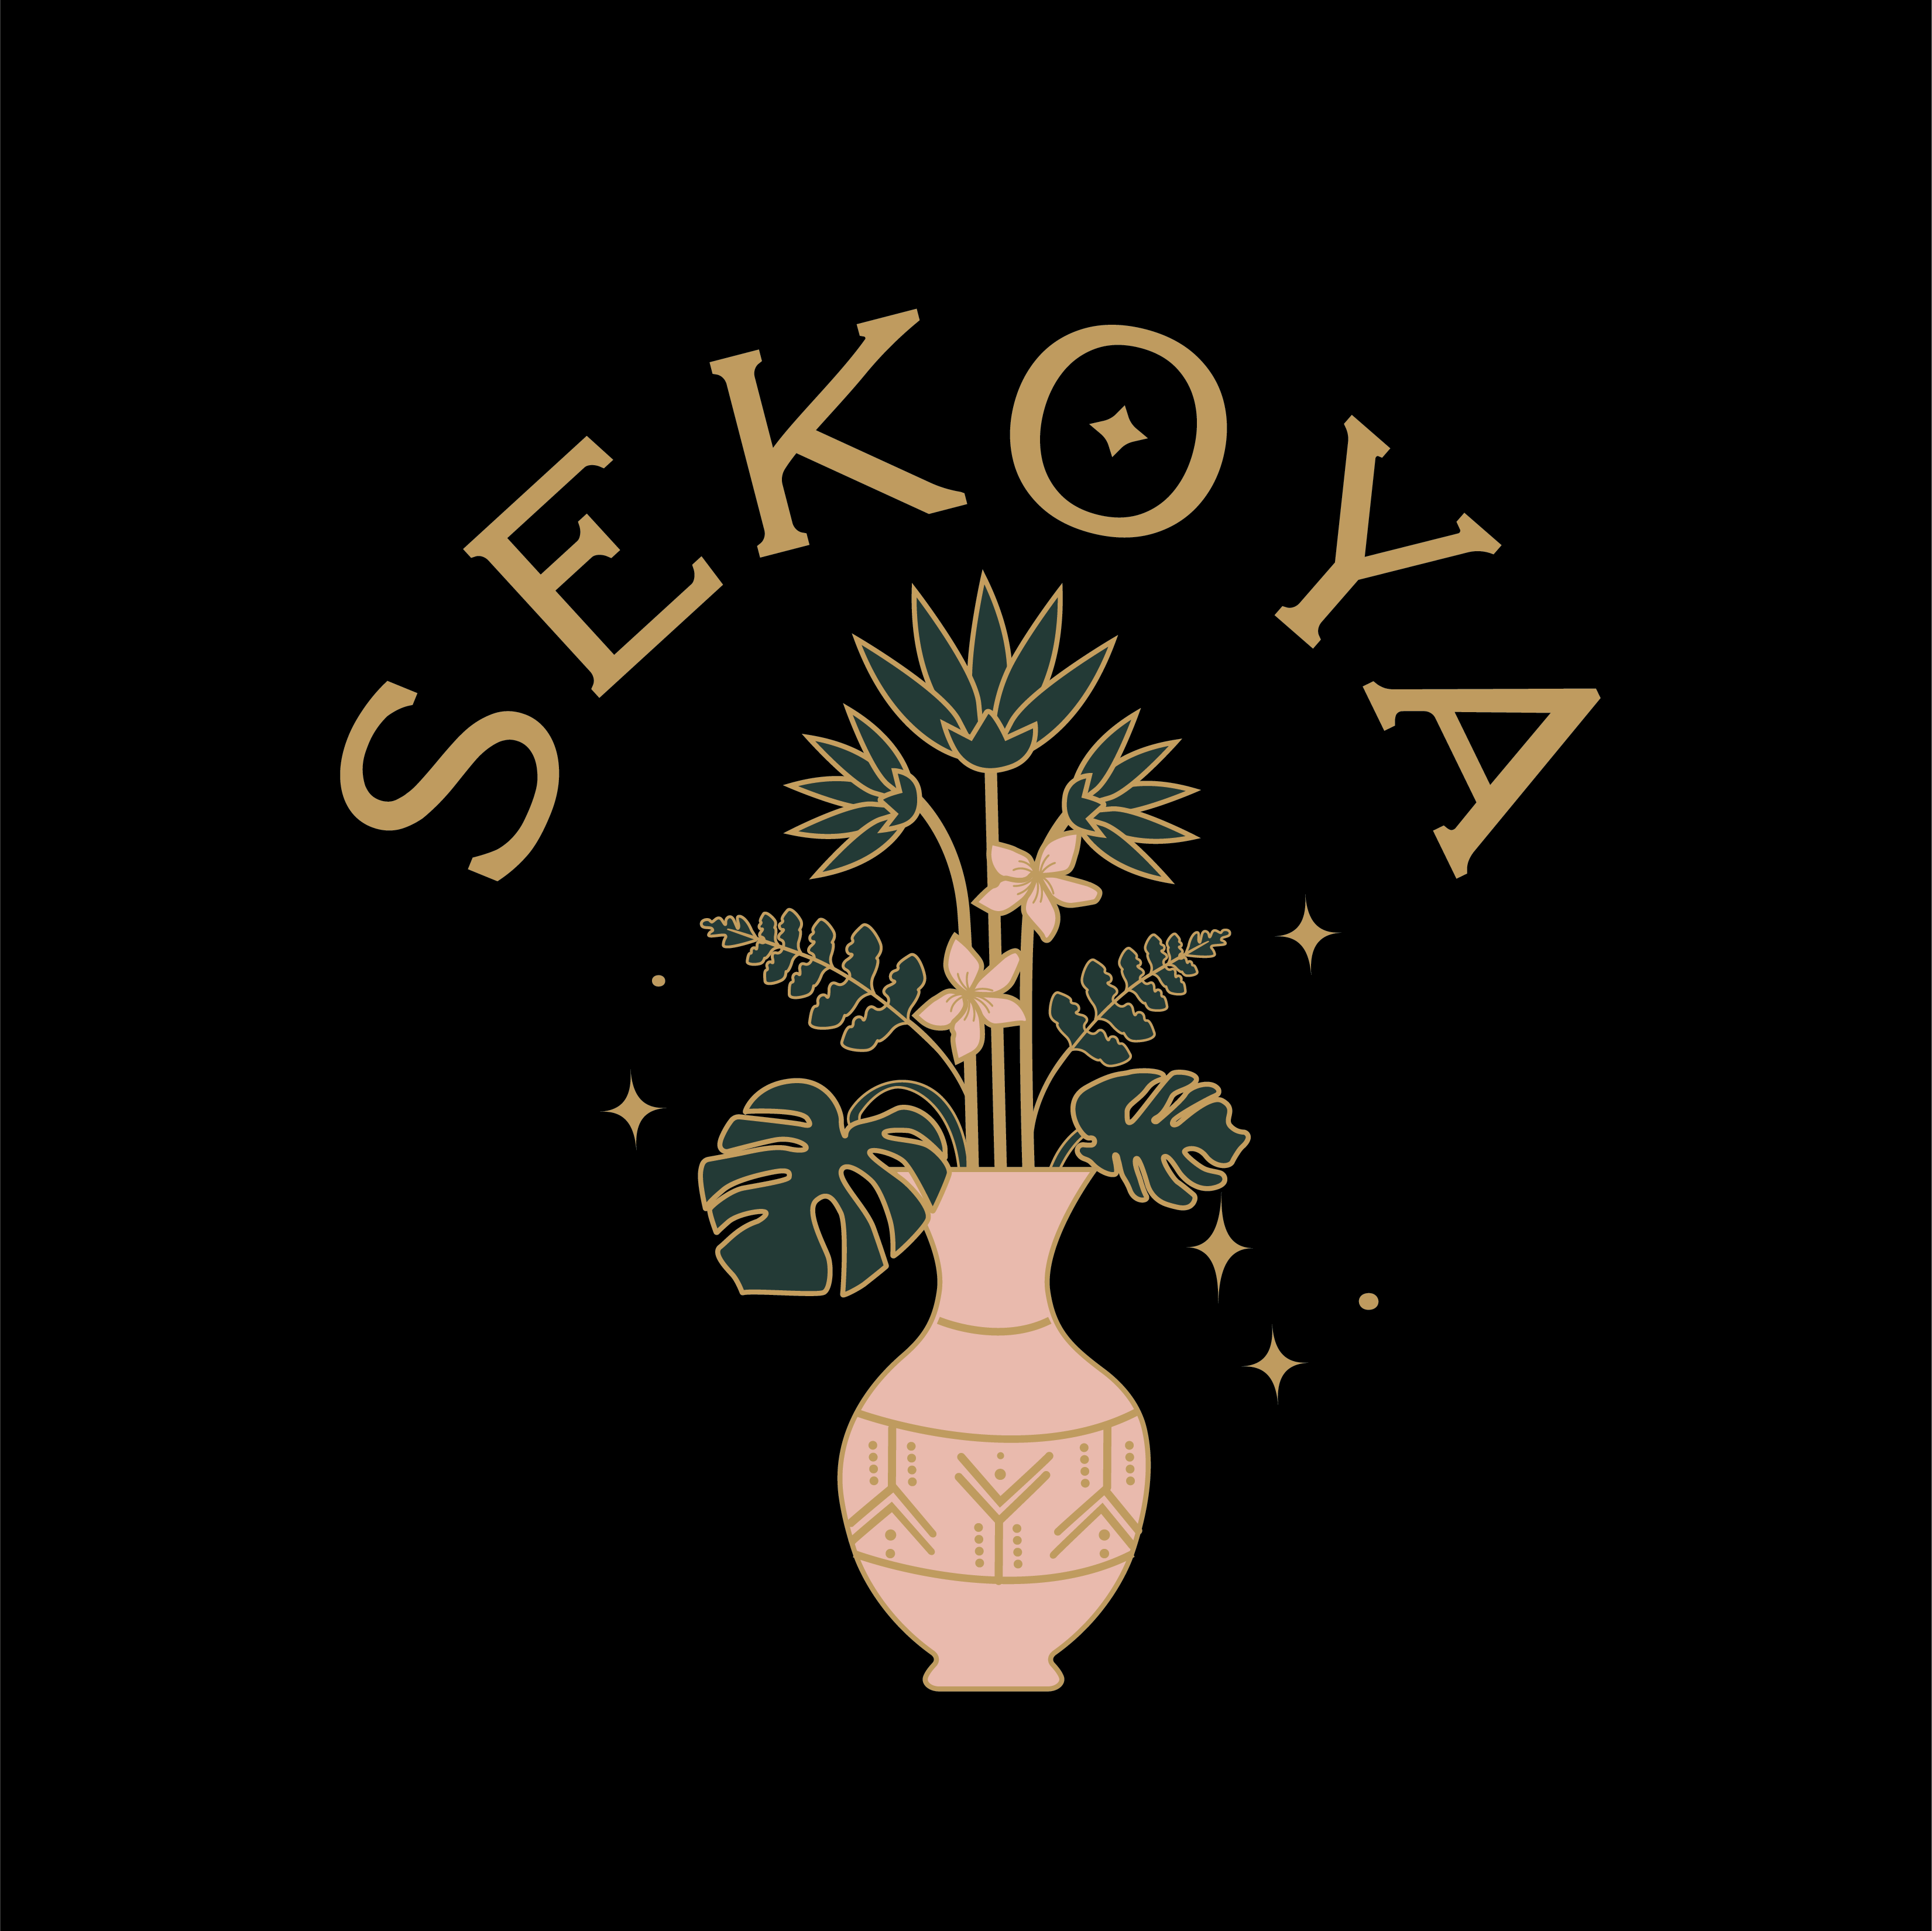 Sekoya Botanicals logo design by logo designer Daphna Sebbane for your inspiration and for the worlds largest logo competition